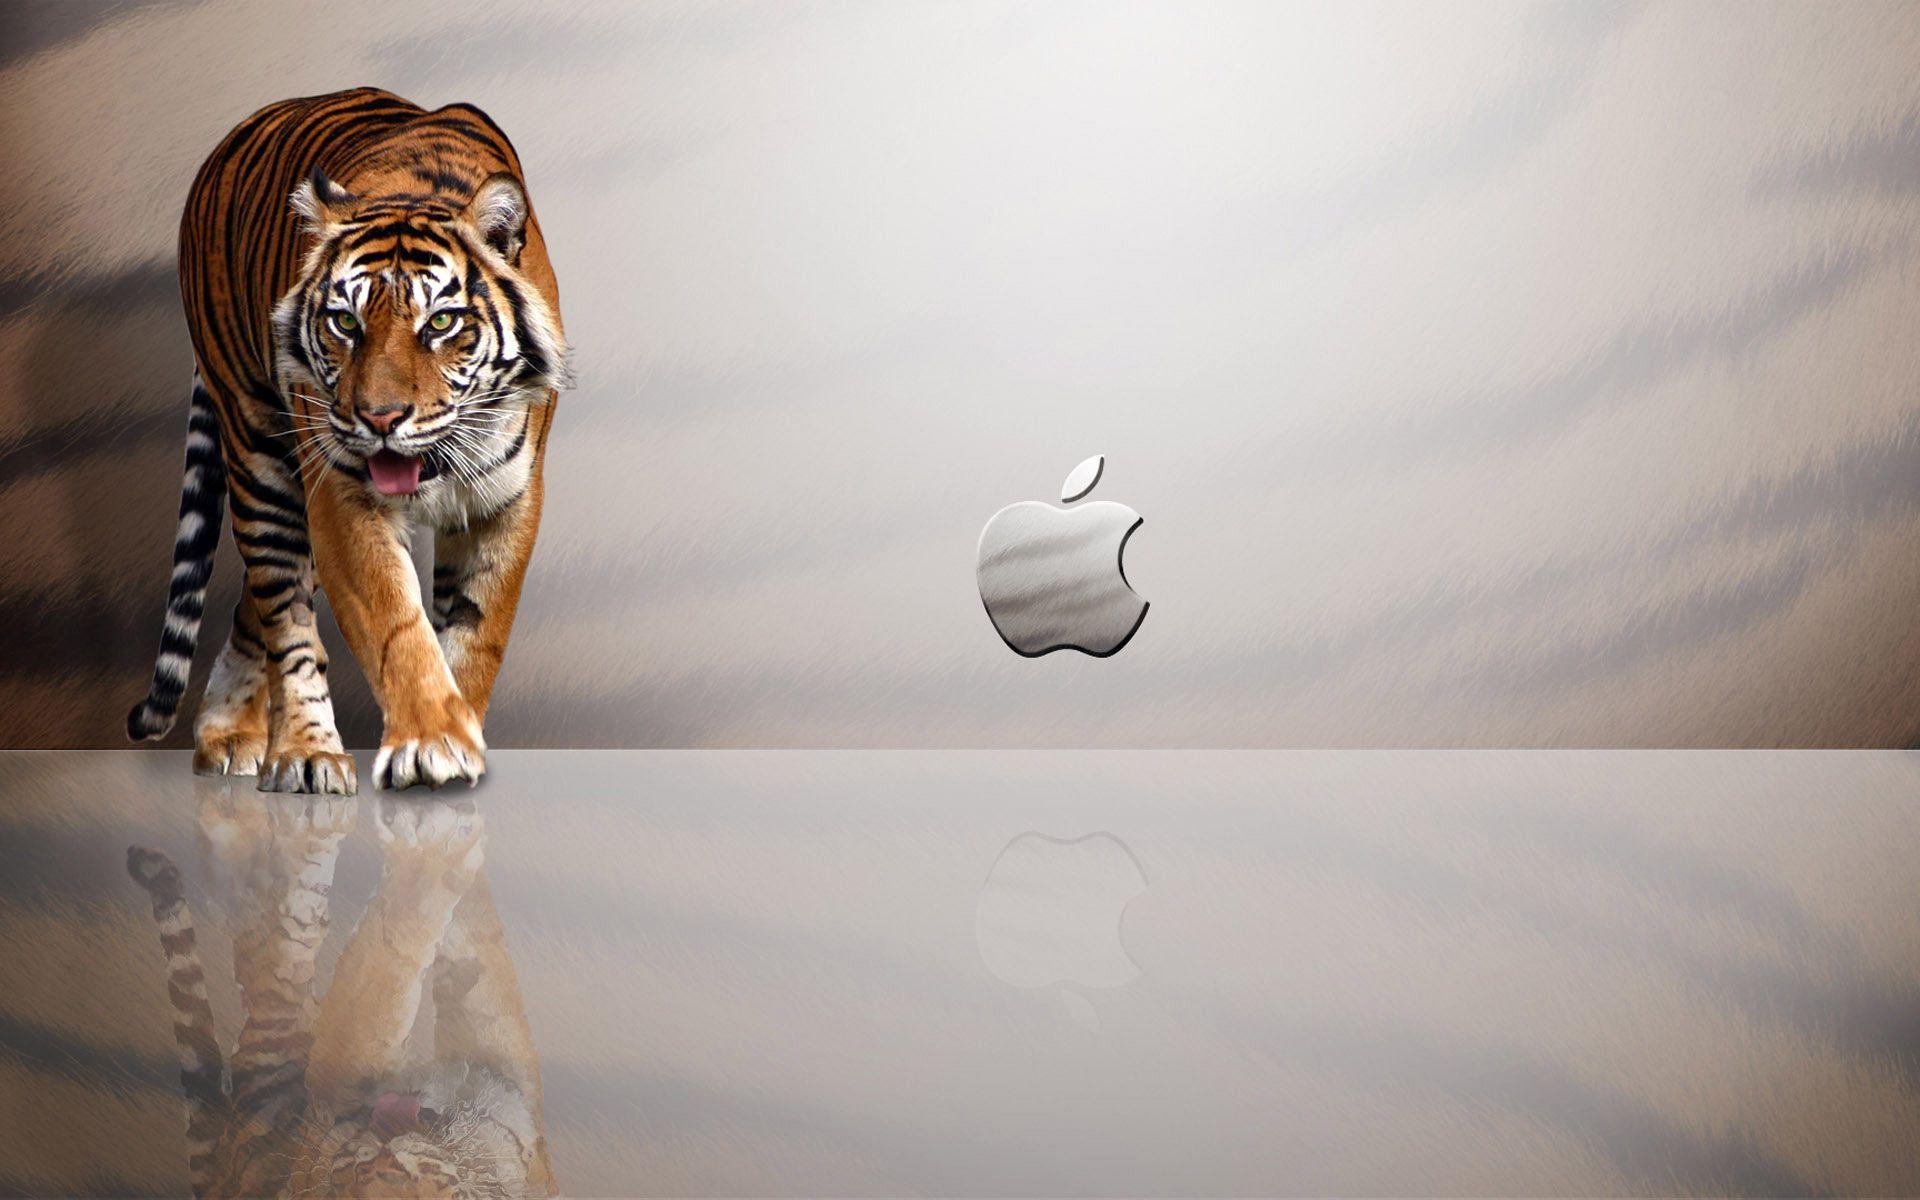 Apple Tiger Mac OS desktop HD wallpaper. High Quality Wallpaper